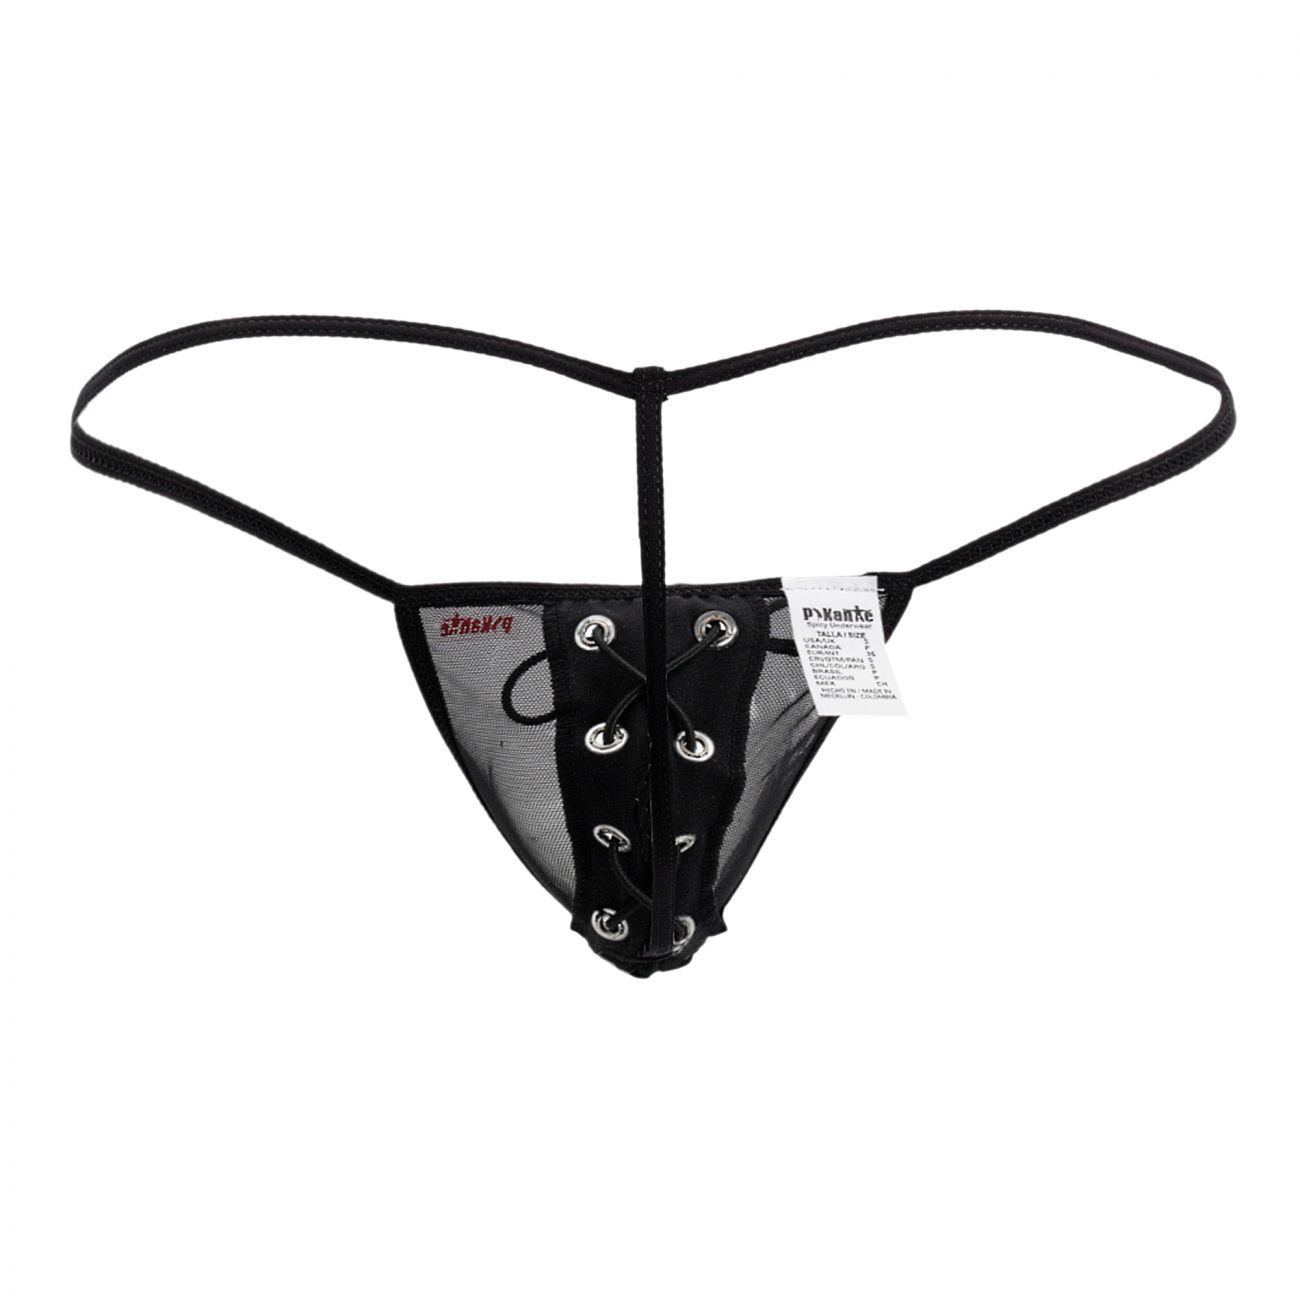 Mens Underwear: Pikante 8060 Power Thongs | eBay